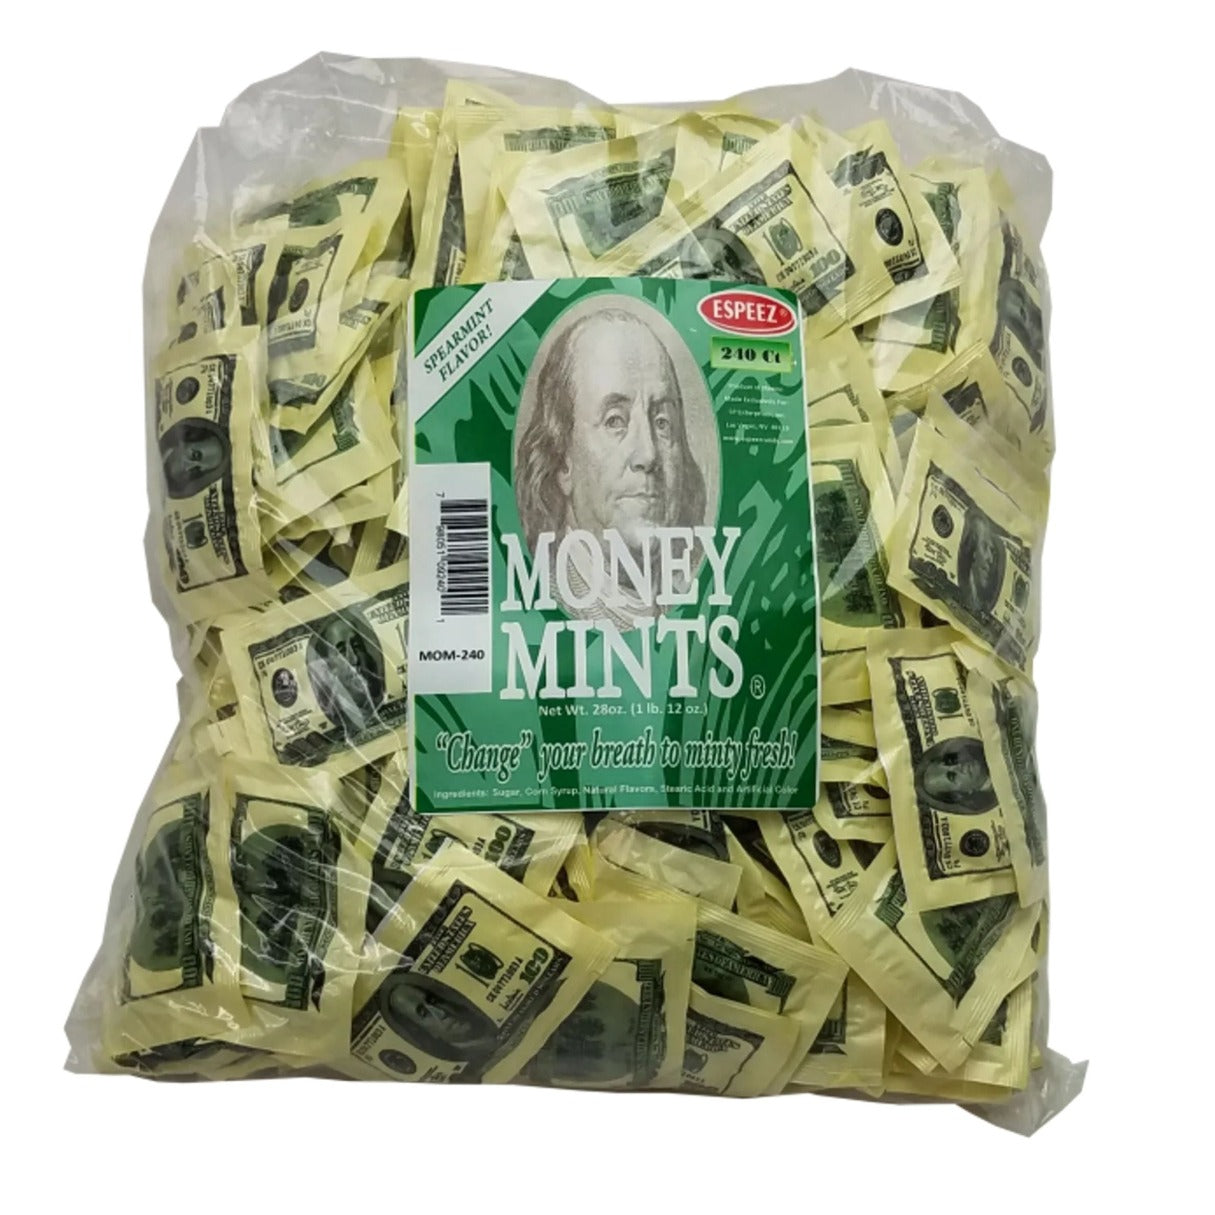 Espeez Money Mints Bag - 2,160ct